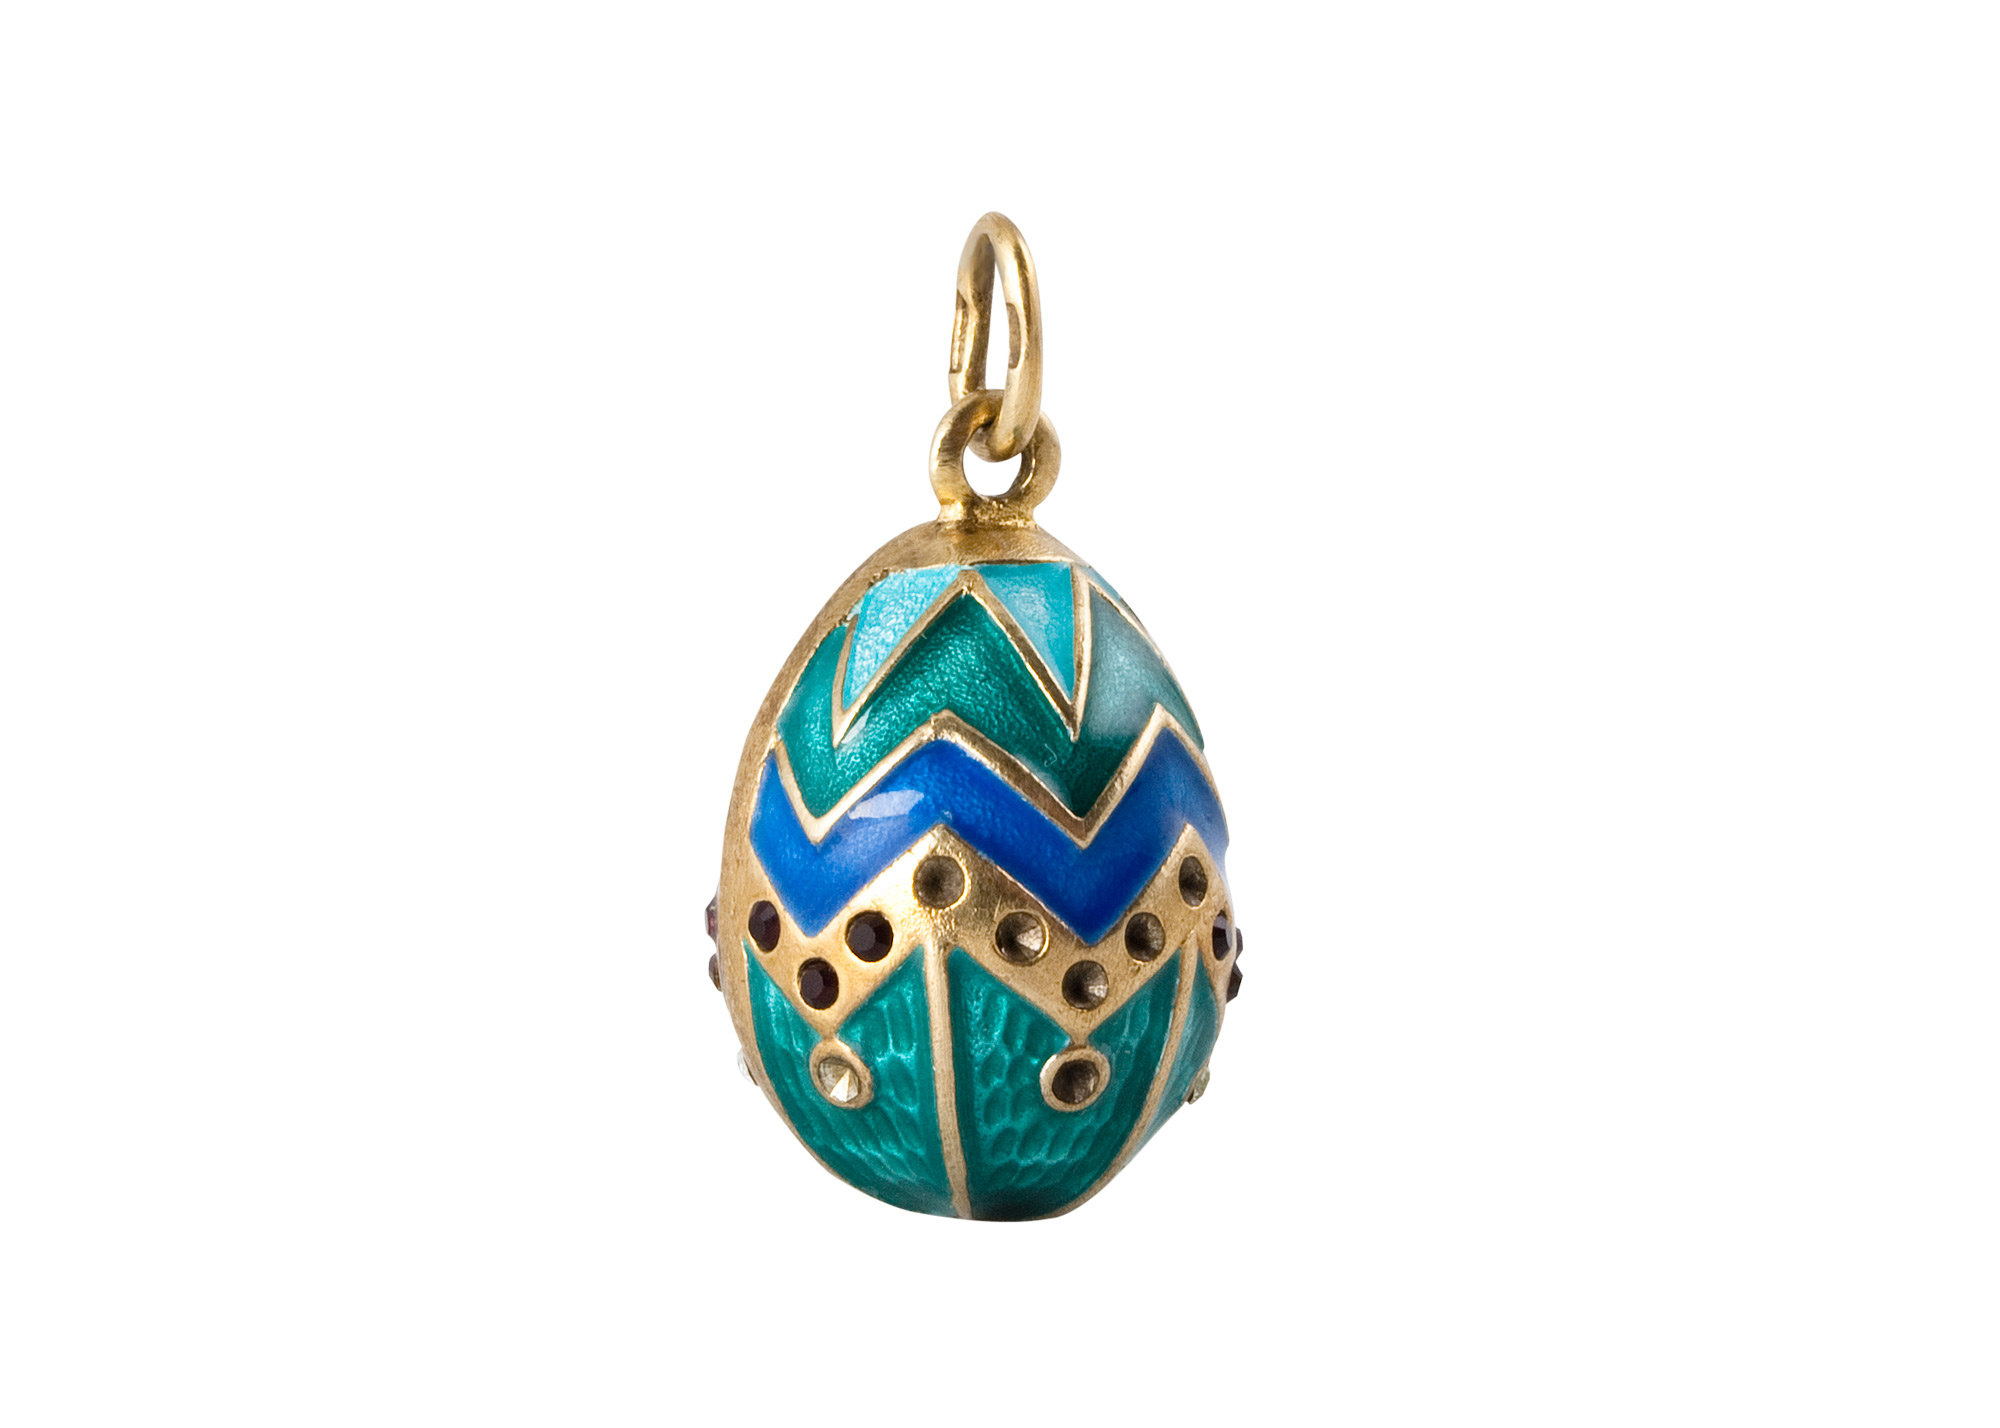 Buy Faberge-Style Egg Pendant "Harlequin Balloon" at GoldenCockerel.com